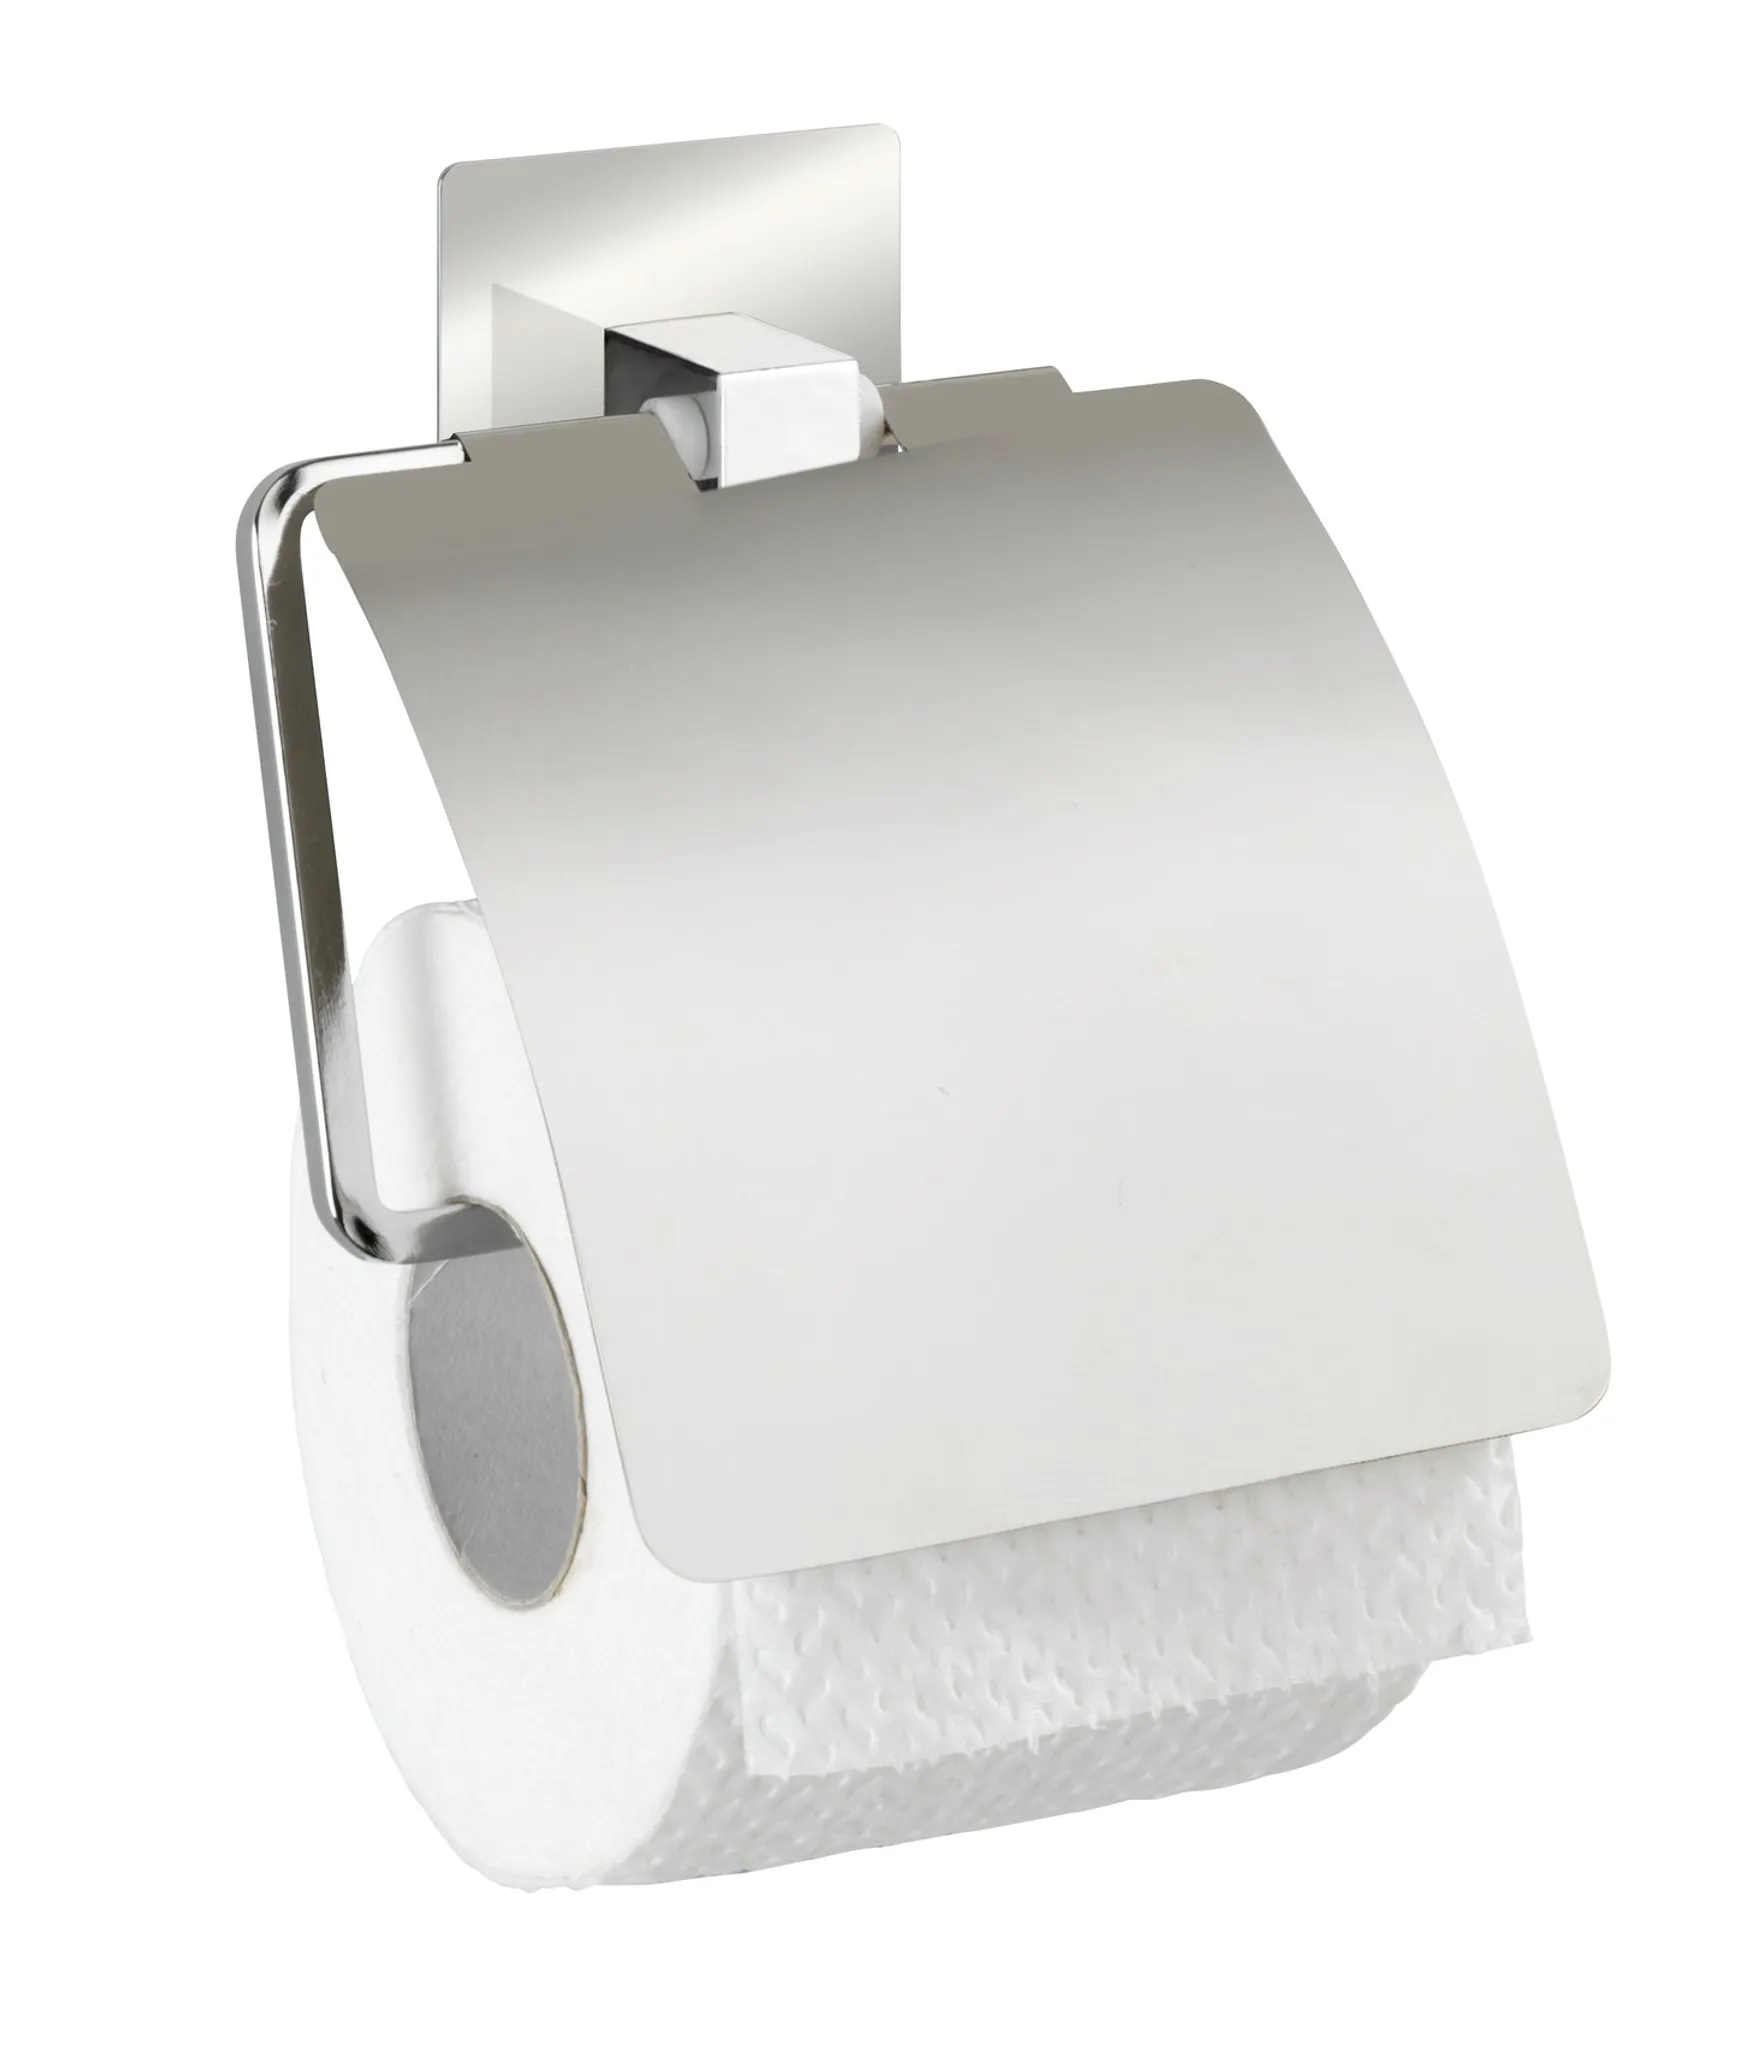 Turbo-Loc® Edelstahl Toilettenpapierhalter